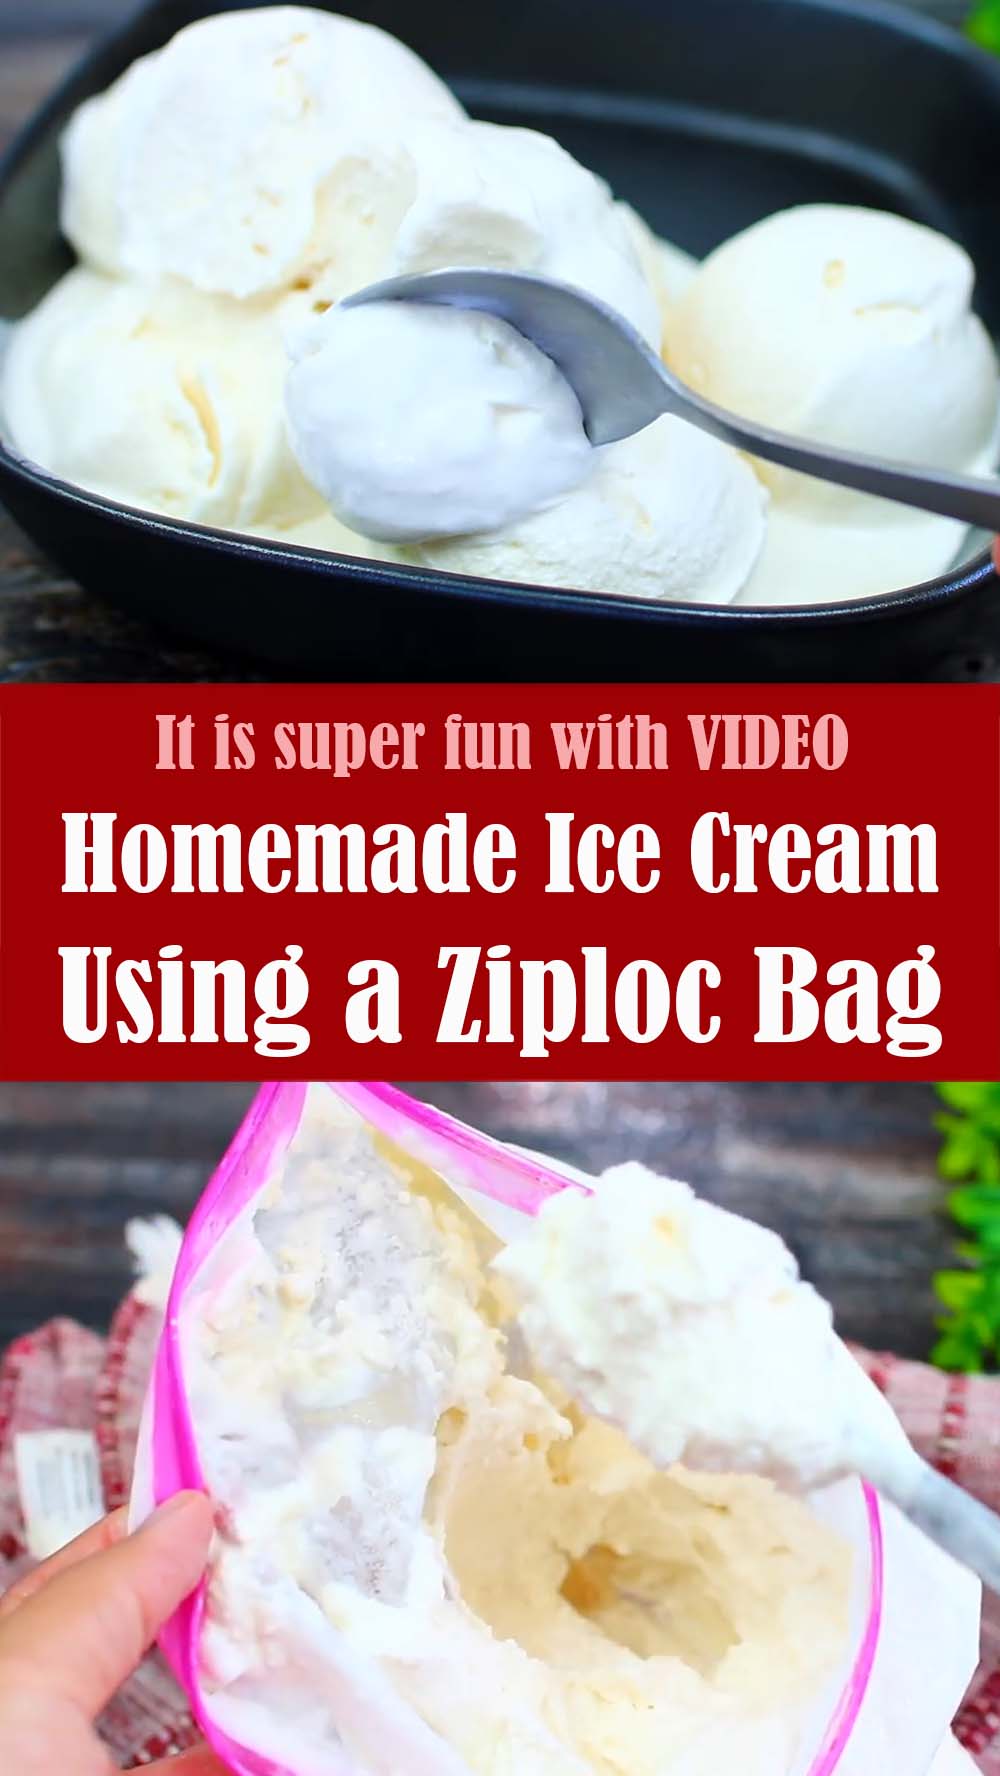 Homemade Ice Cream Using a Ziploc Bag